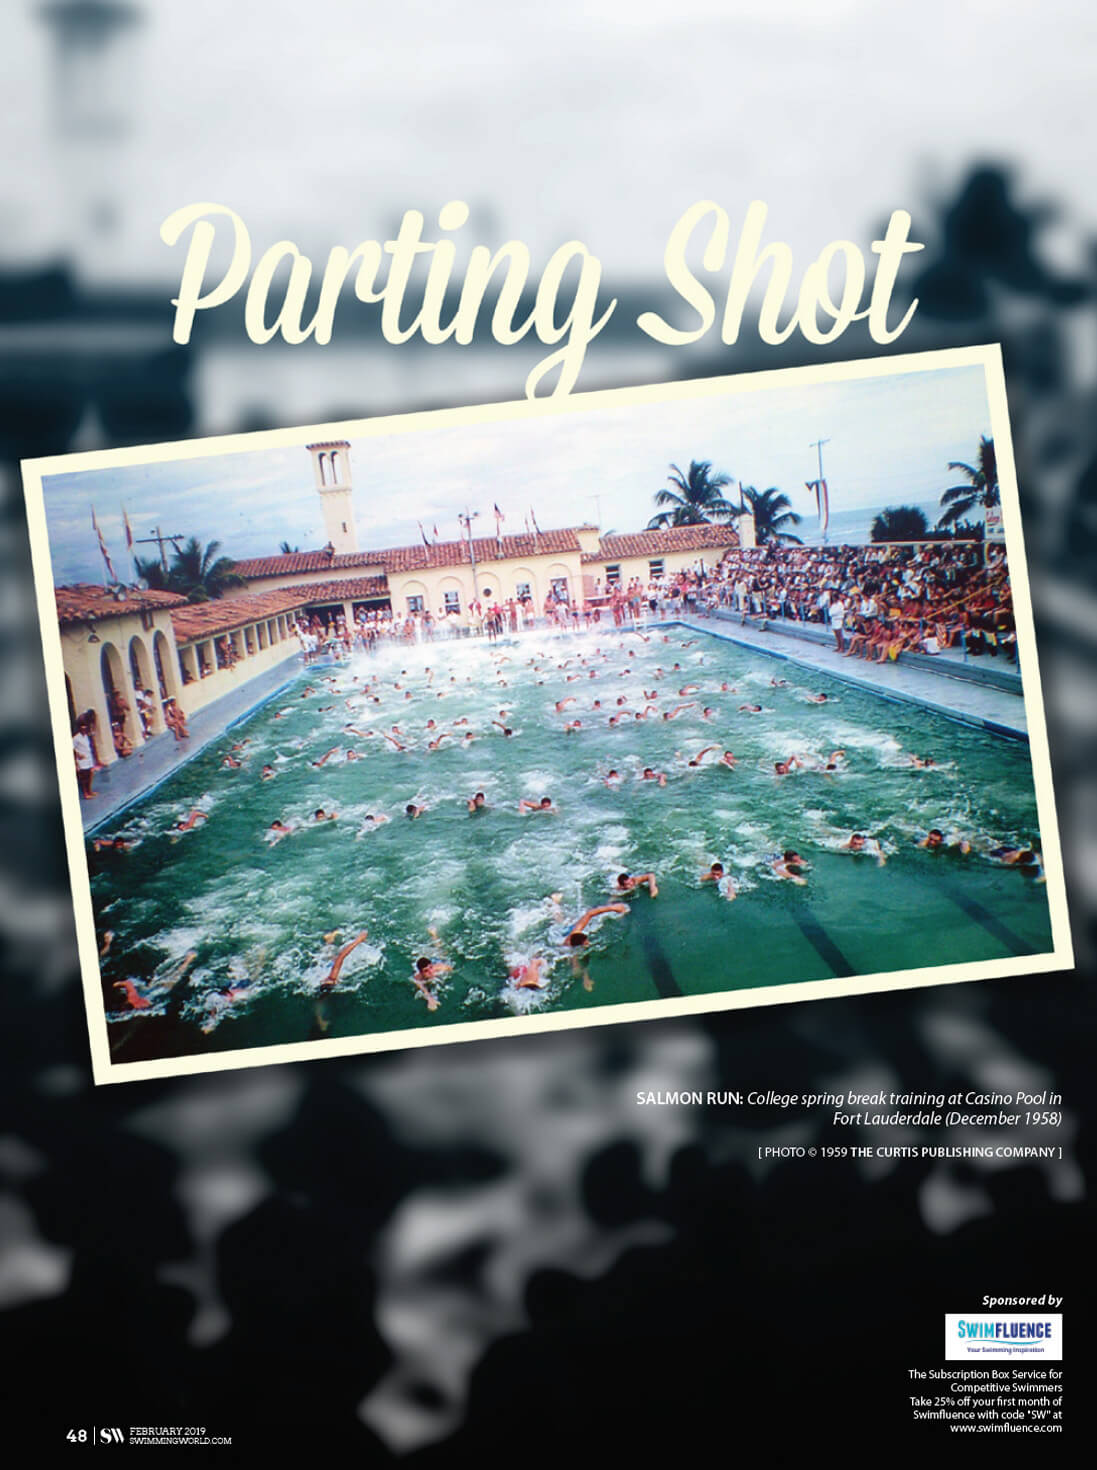 Swimming World Magazine - Parting Shot March 2019 - Salmon Run - Spring Break at the Fort Lauderdale Casino Pool 1958